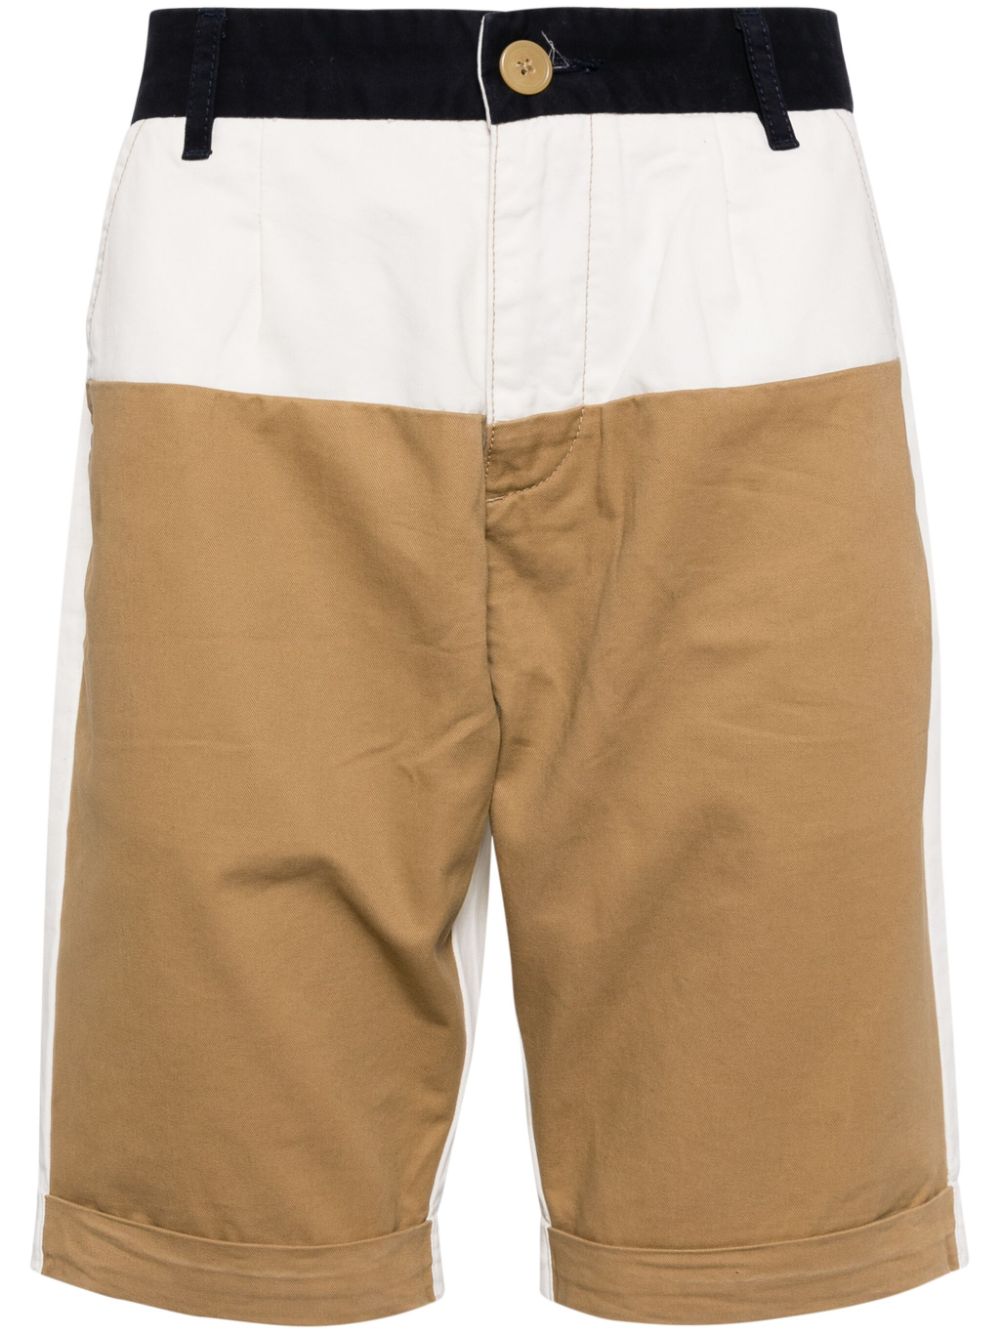 The Monarch cotton shorts